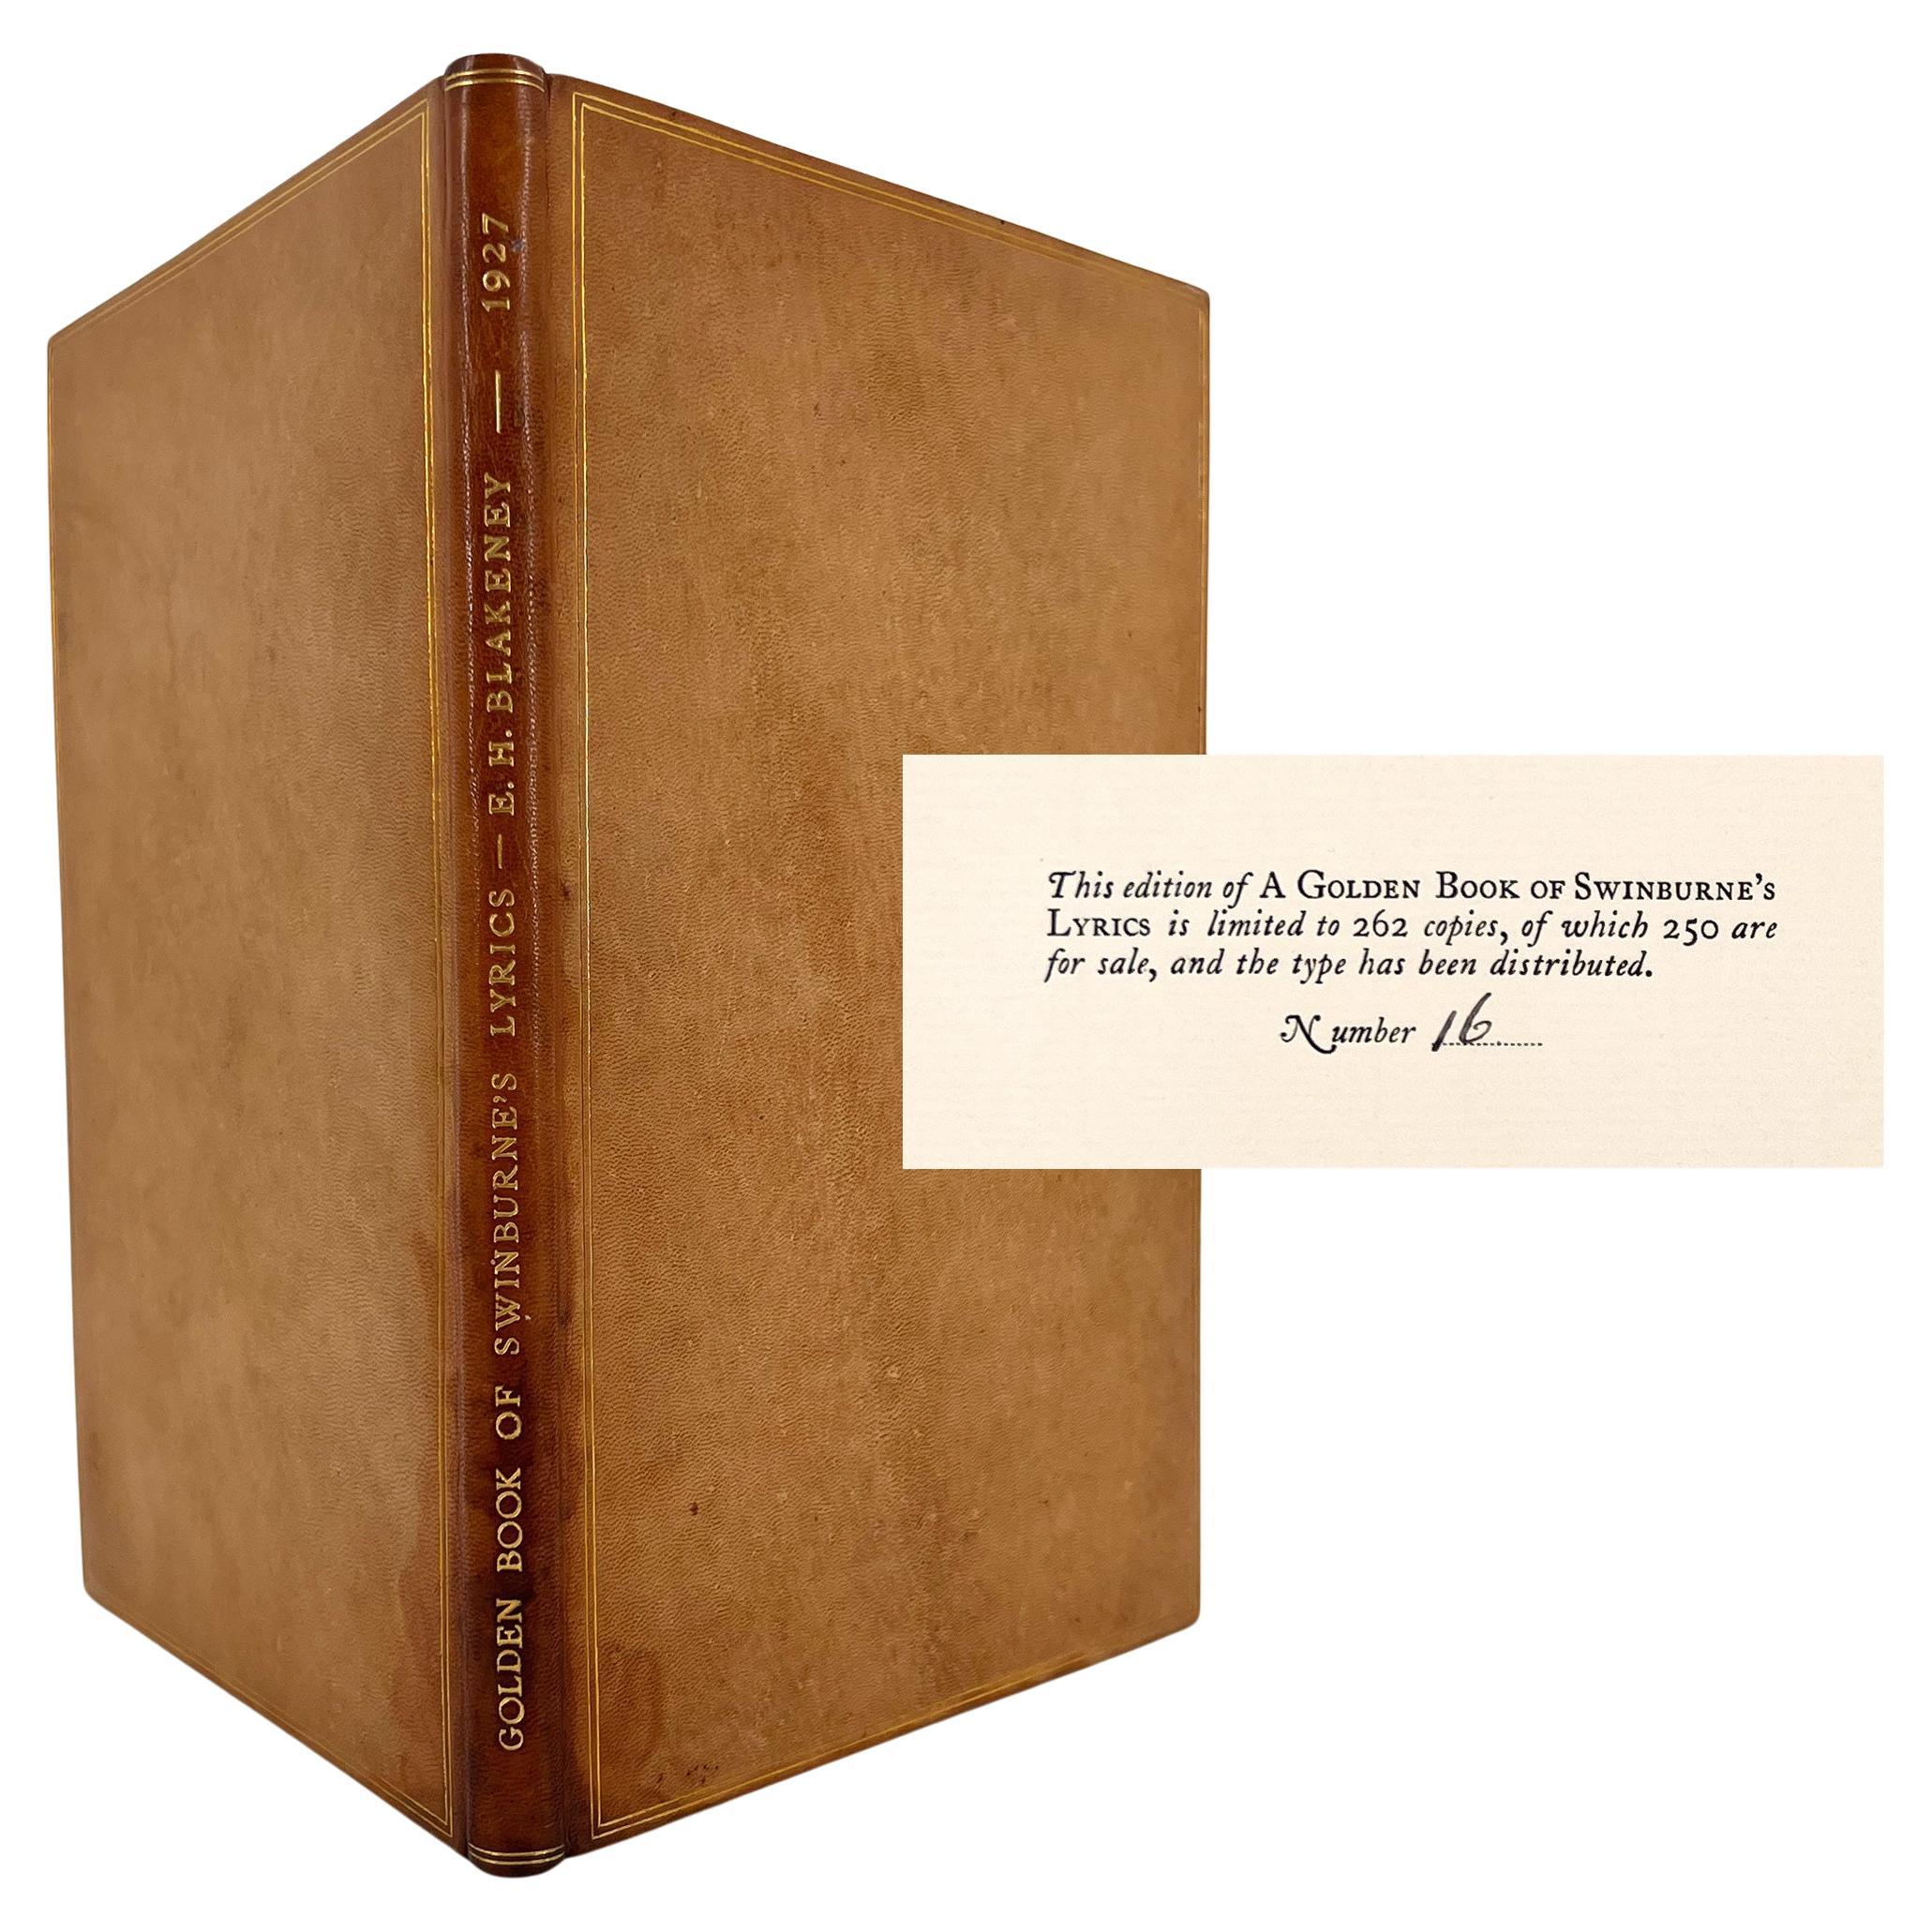 The Golden Book of Swinburne's Lyrics